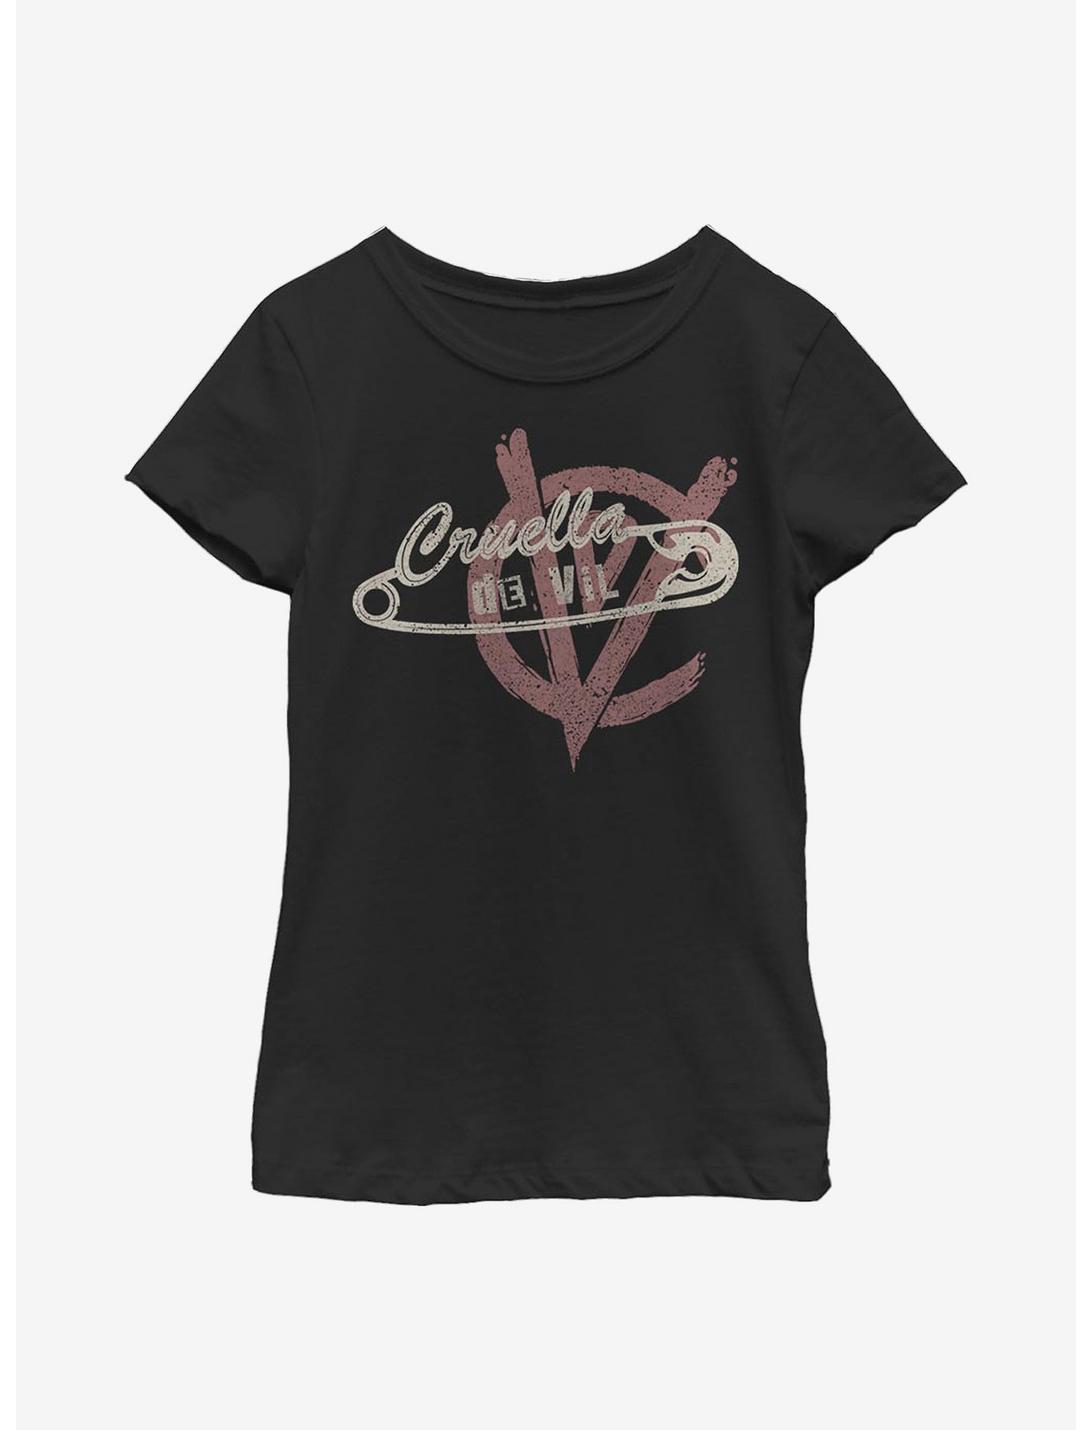 Disney Cruella De Vil Anarchy Youth Girls T-Shirt, BLACK, hi-res